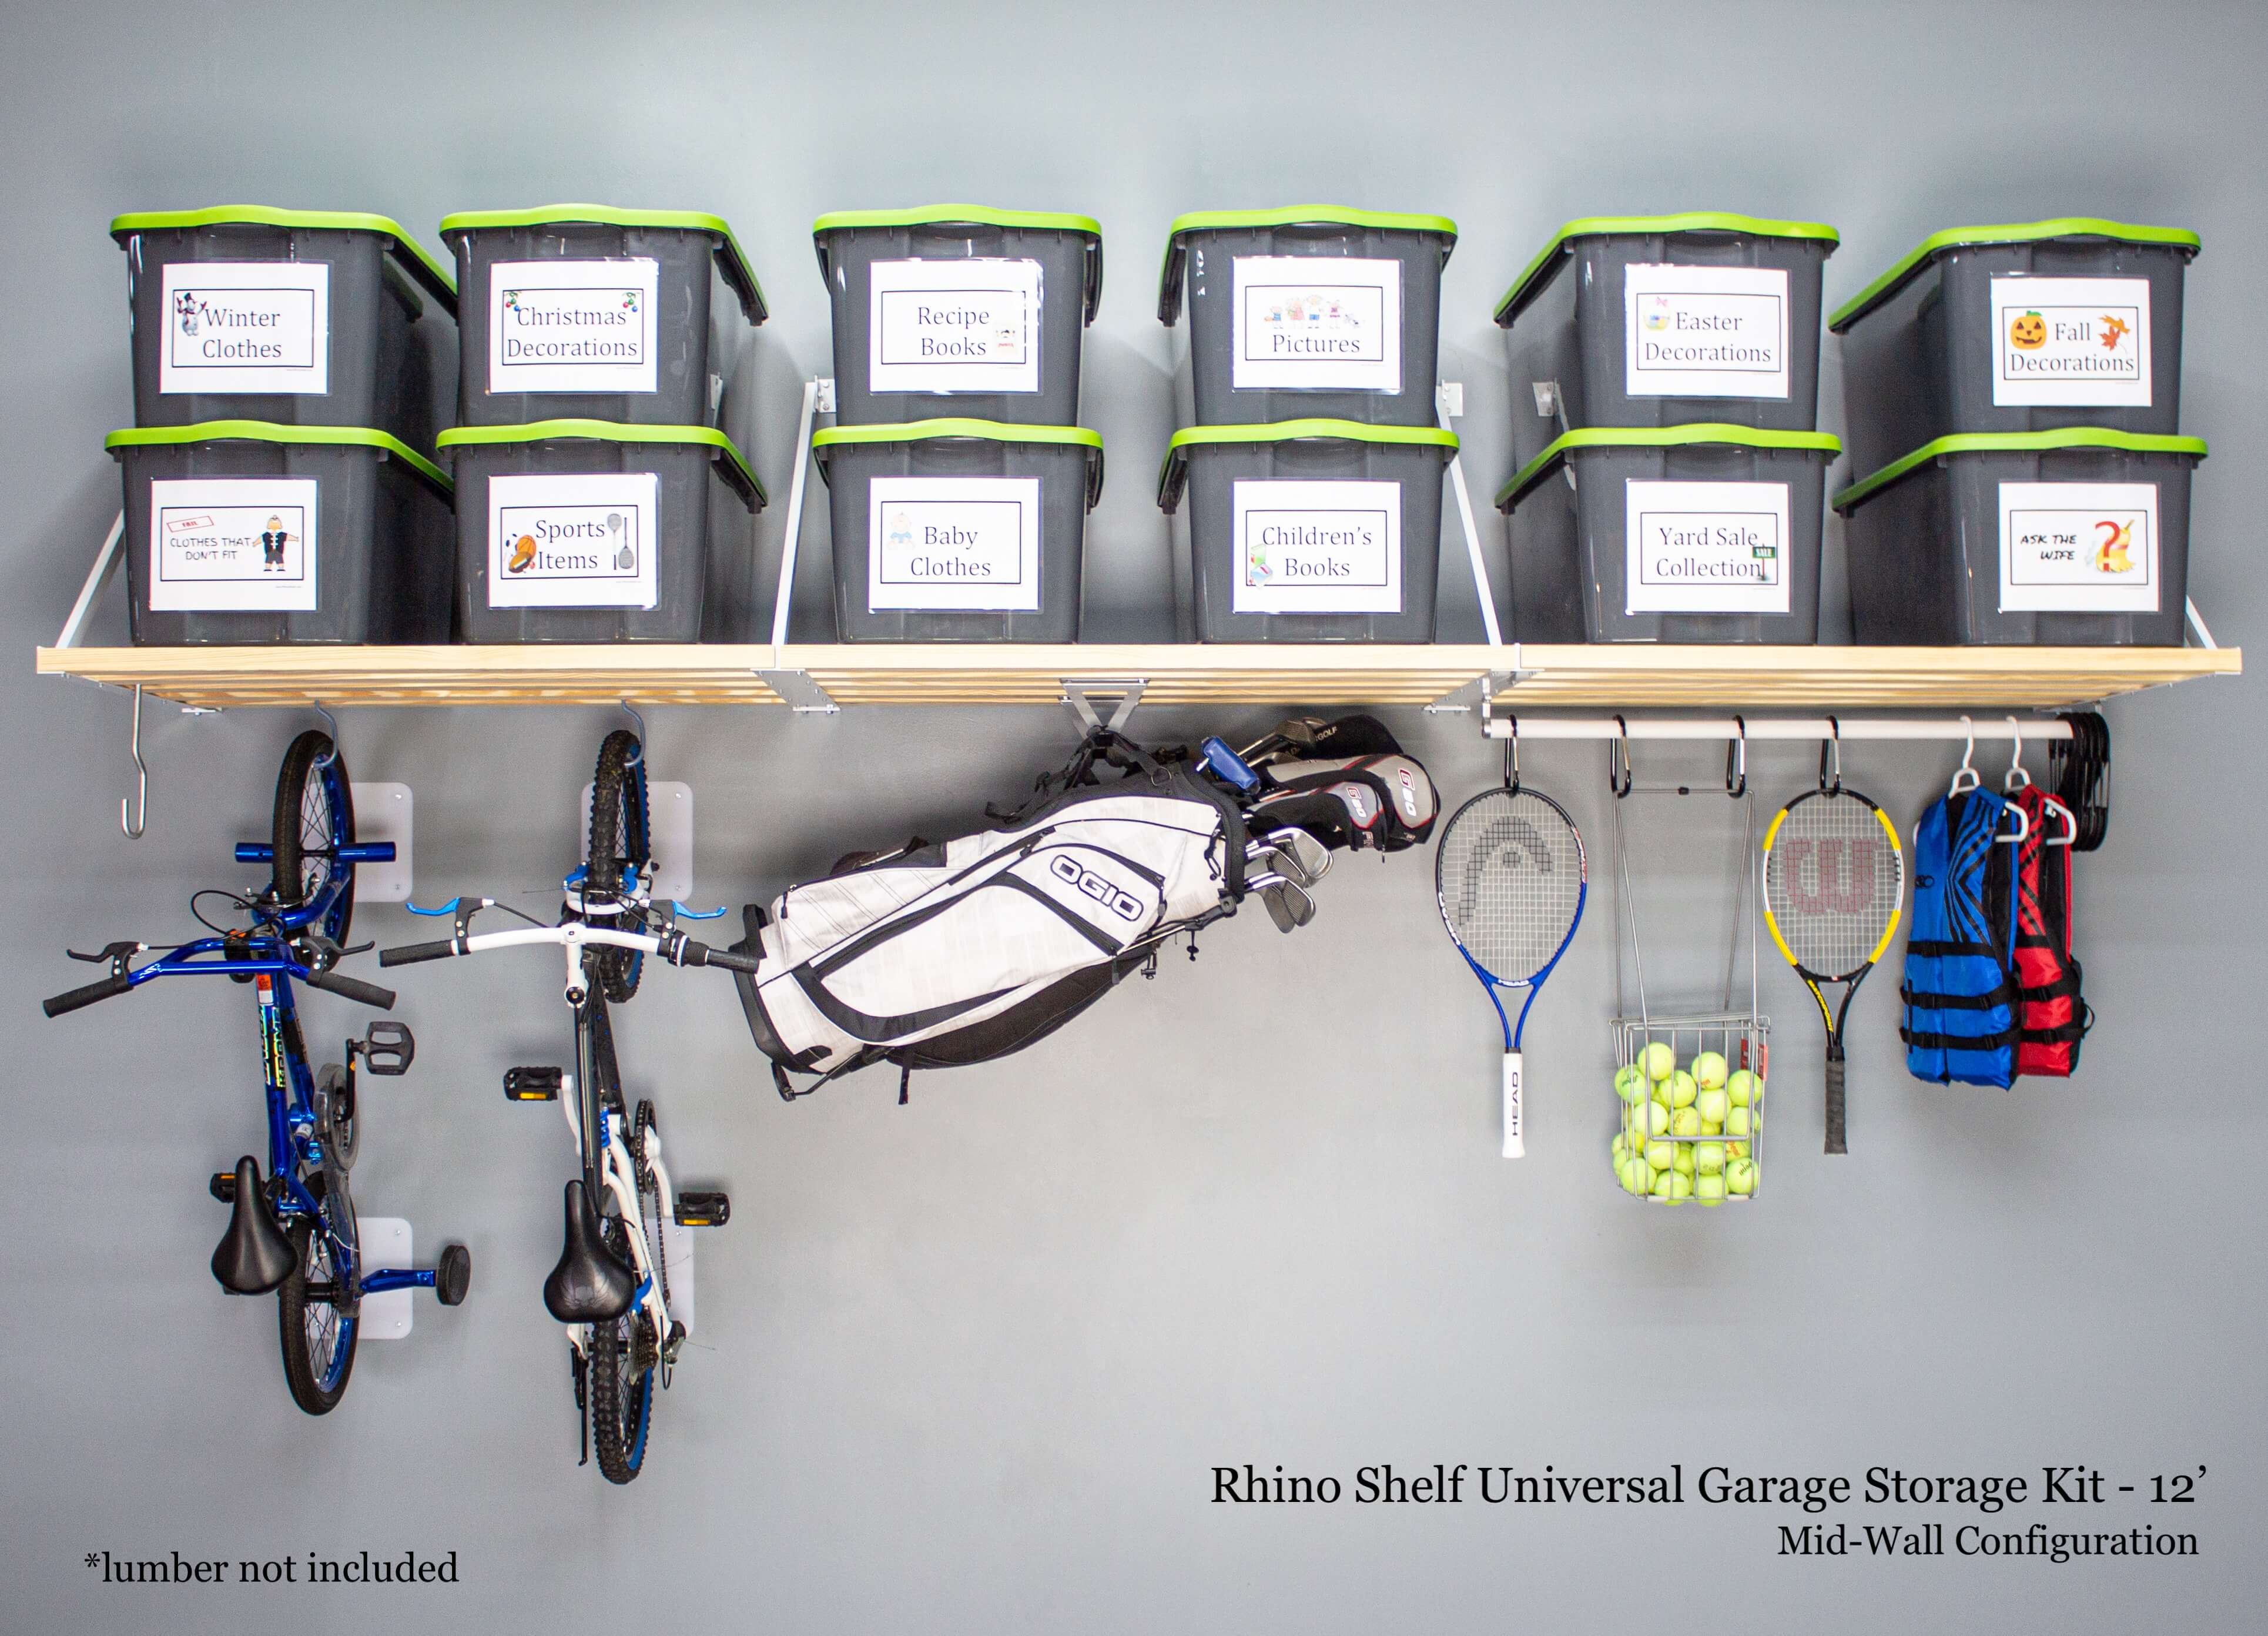 Rhino Shelf Universal Garage Storage Kit - 12 ft, Mid-Wall Configuration